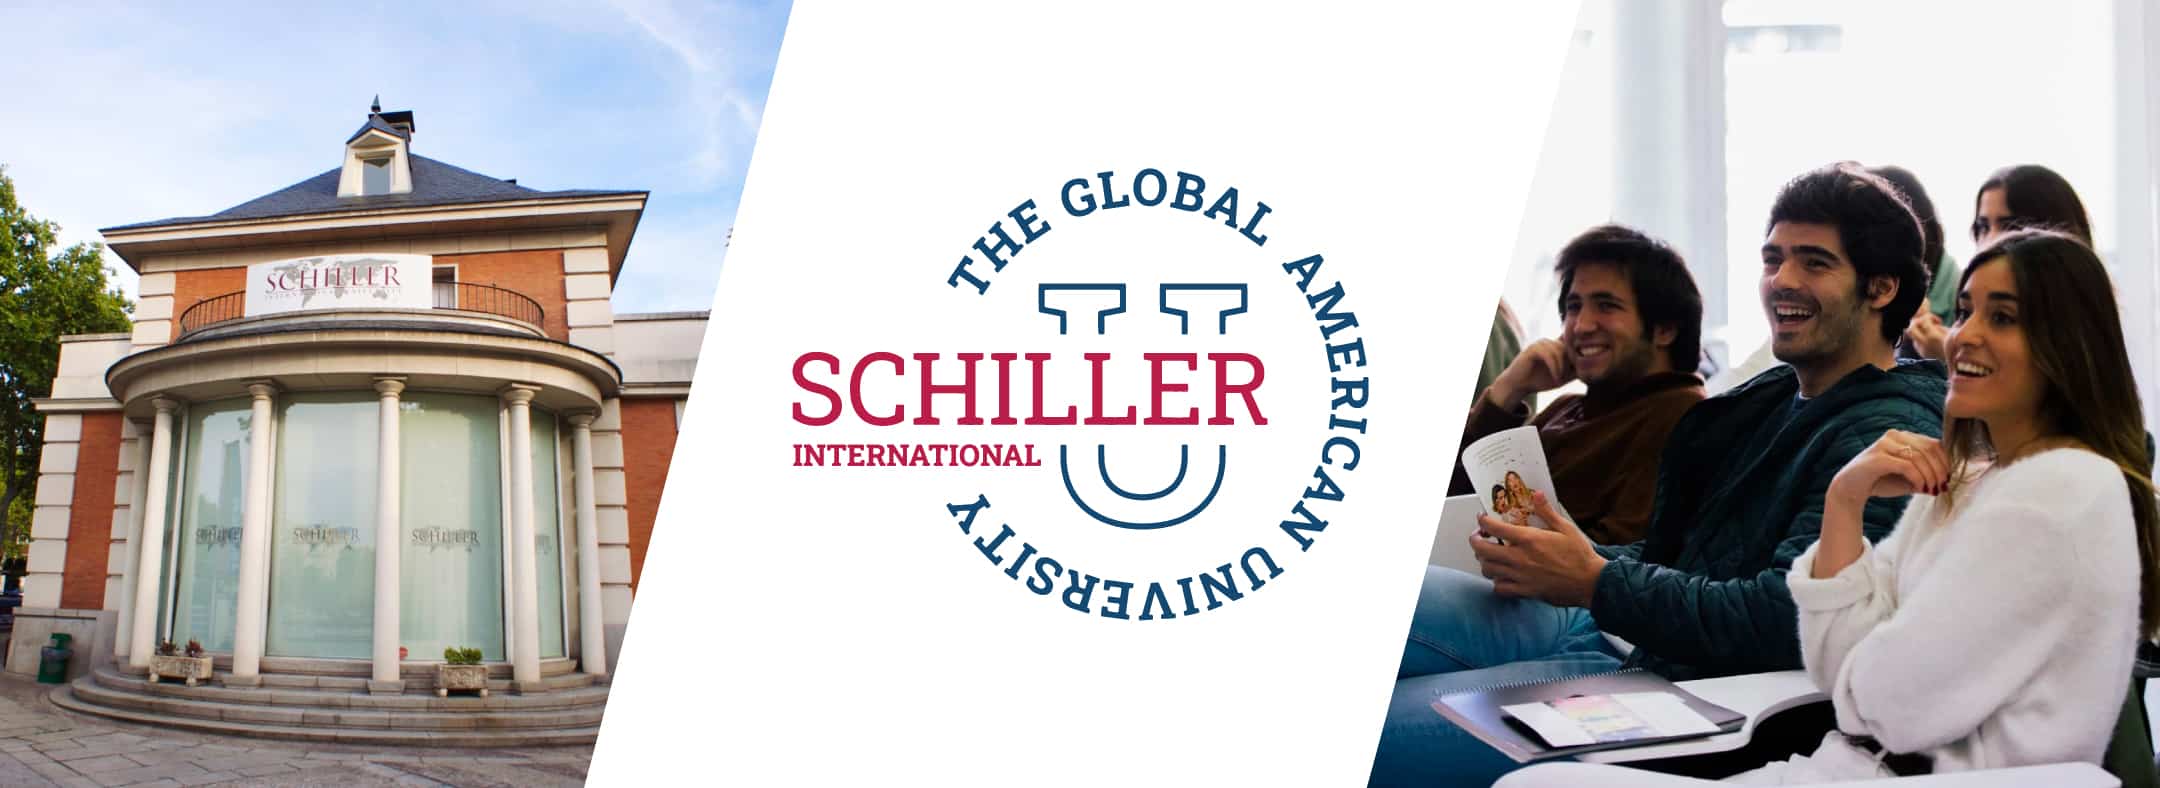 schiller-global-american-international-university-web-banner